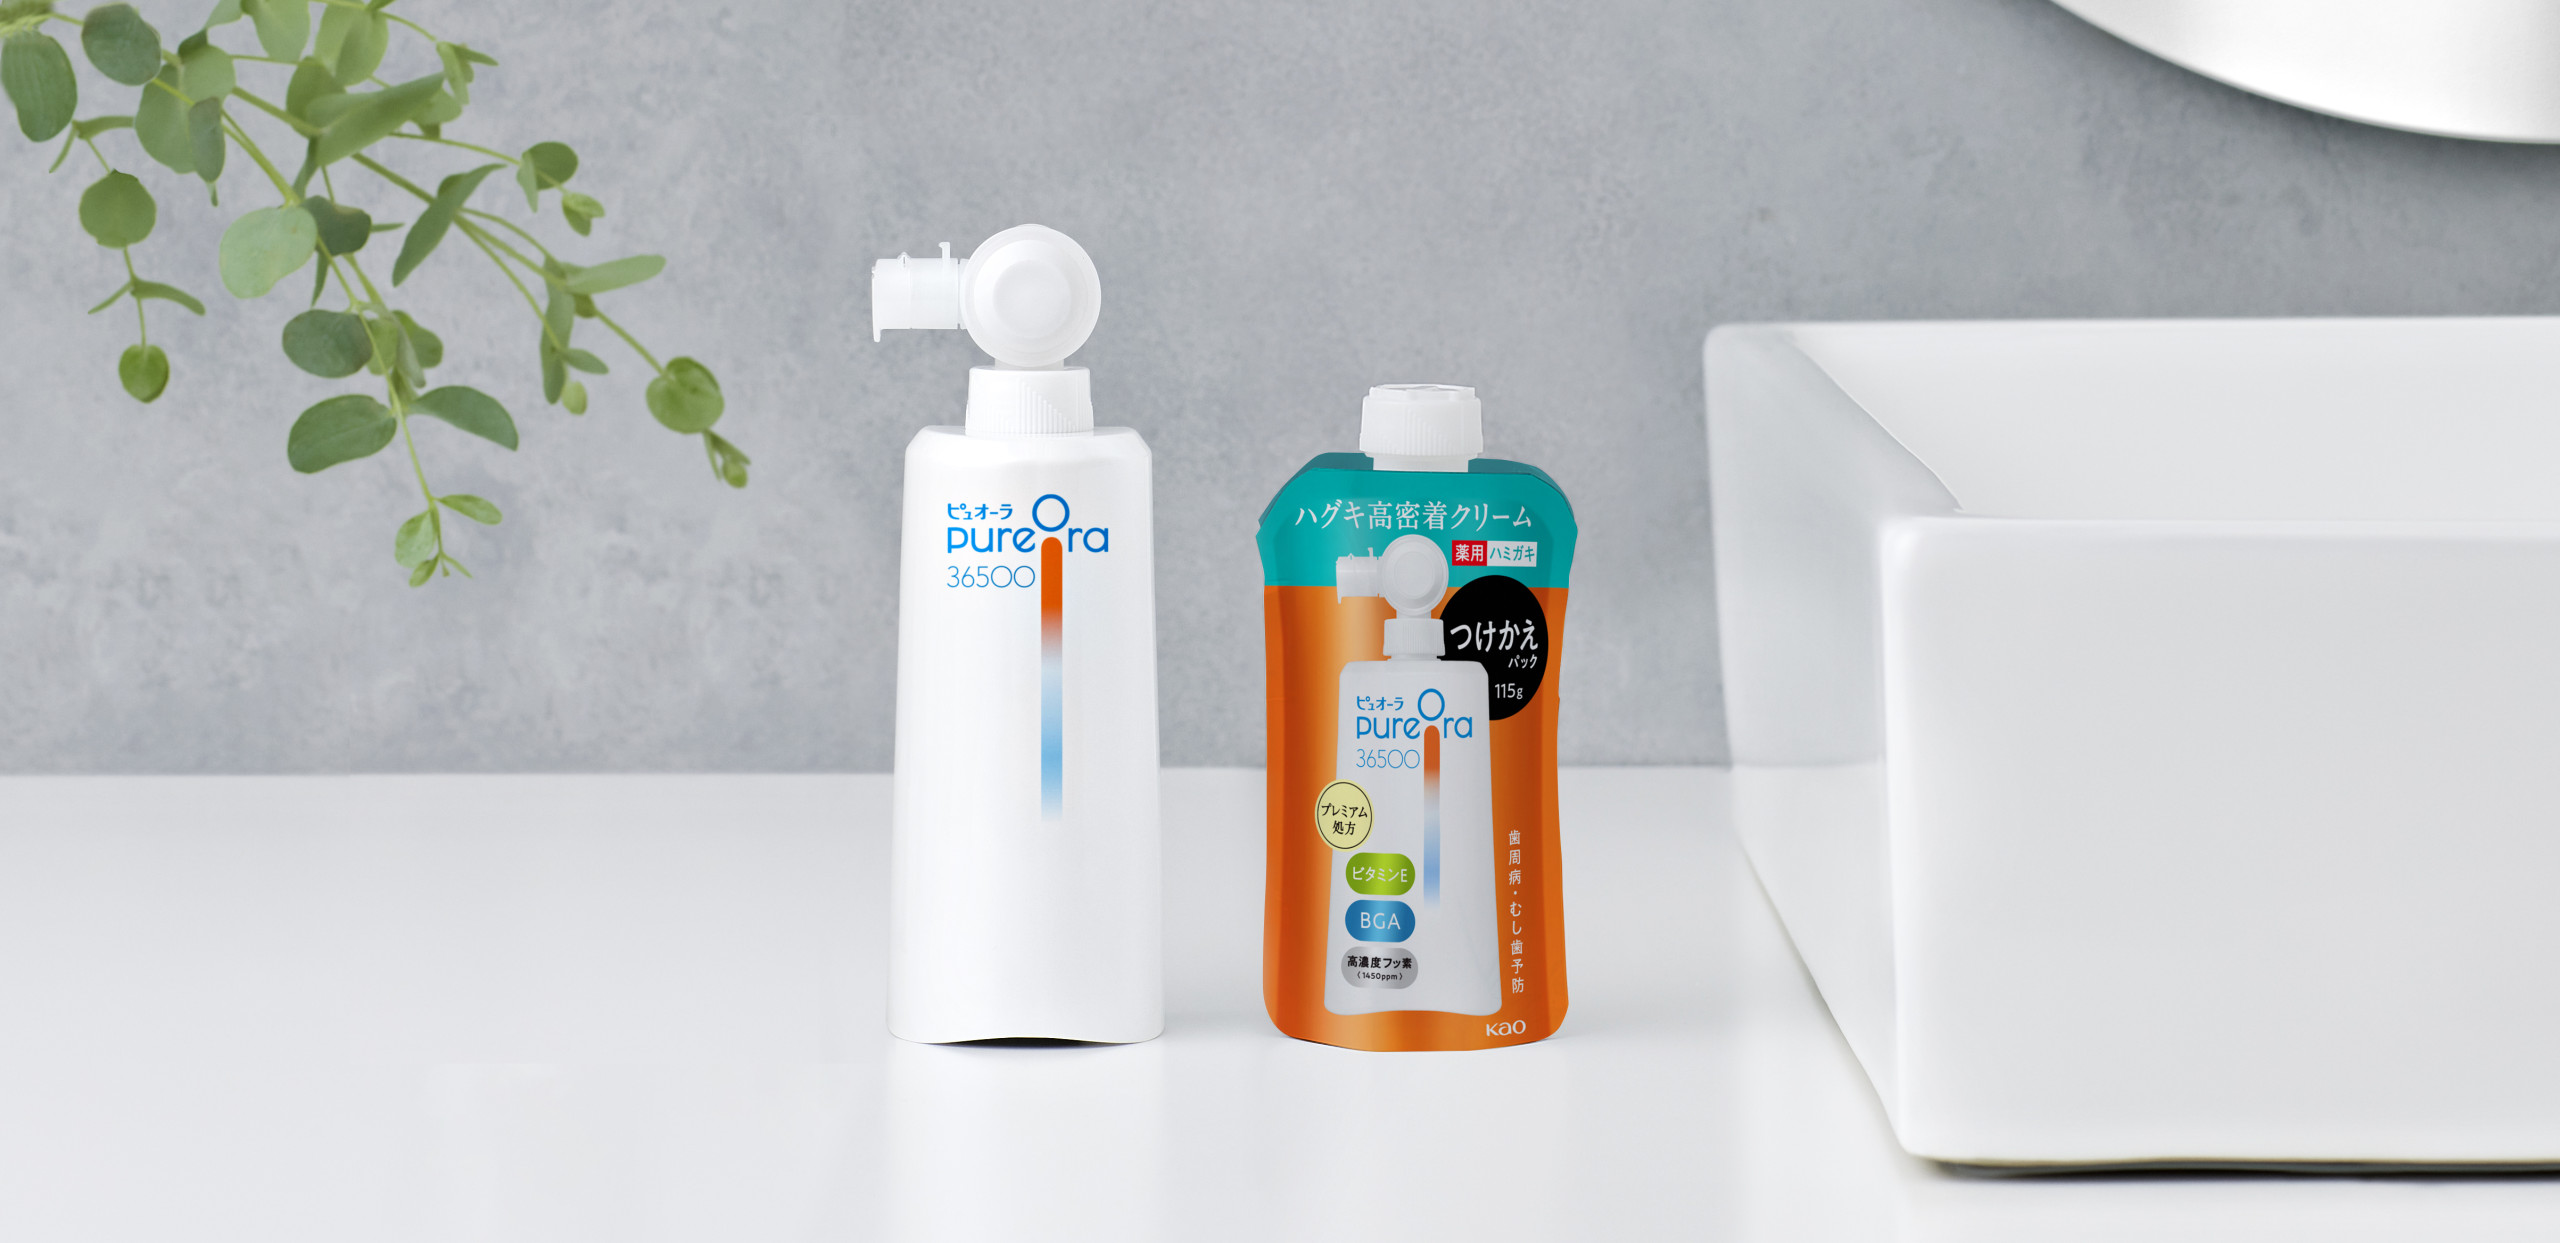 ADF Innovation Award voor PureOra36500 Creamy Toothpaste - Kao Corporation